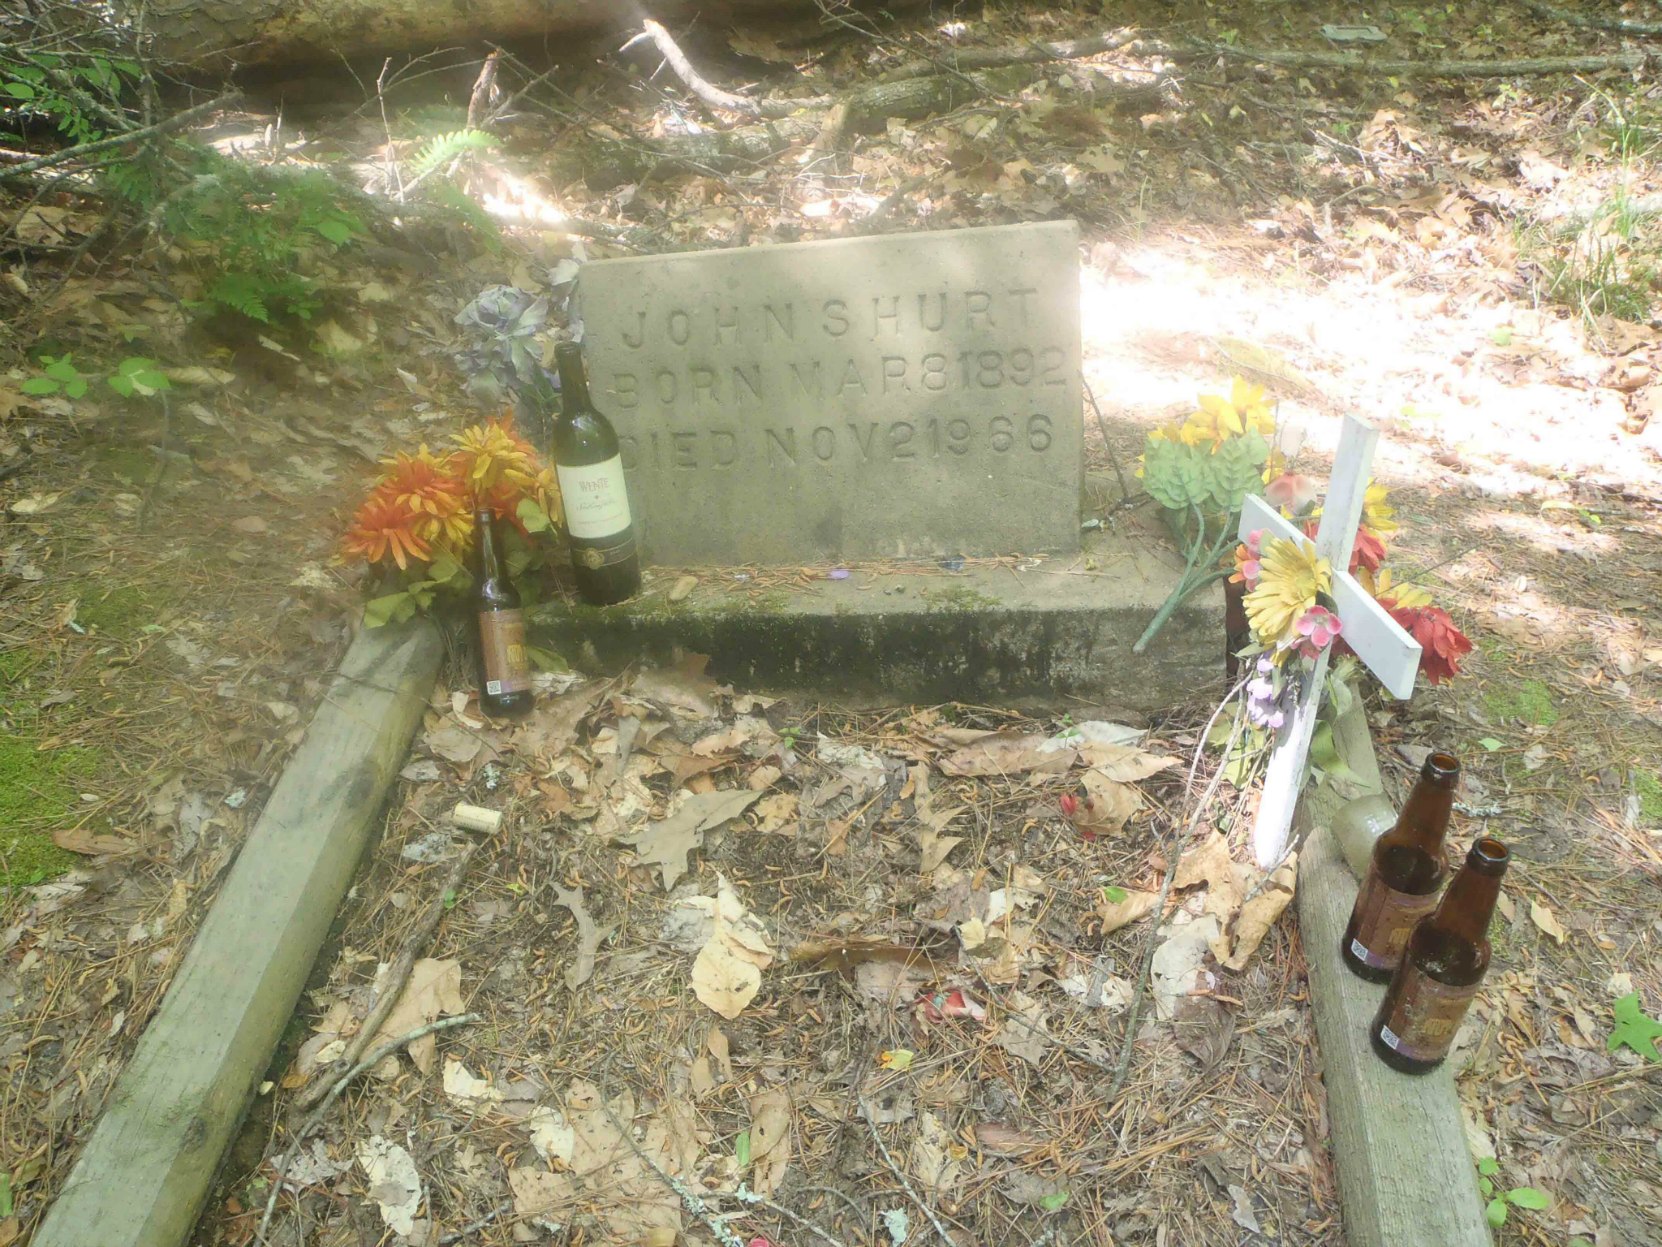 Mississippi John Hurt's grave, Avalon, Mississippi, with tributes left by fans.